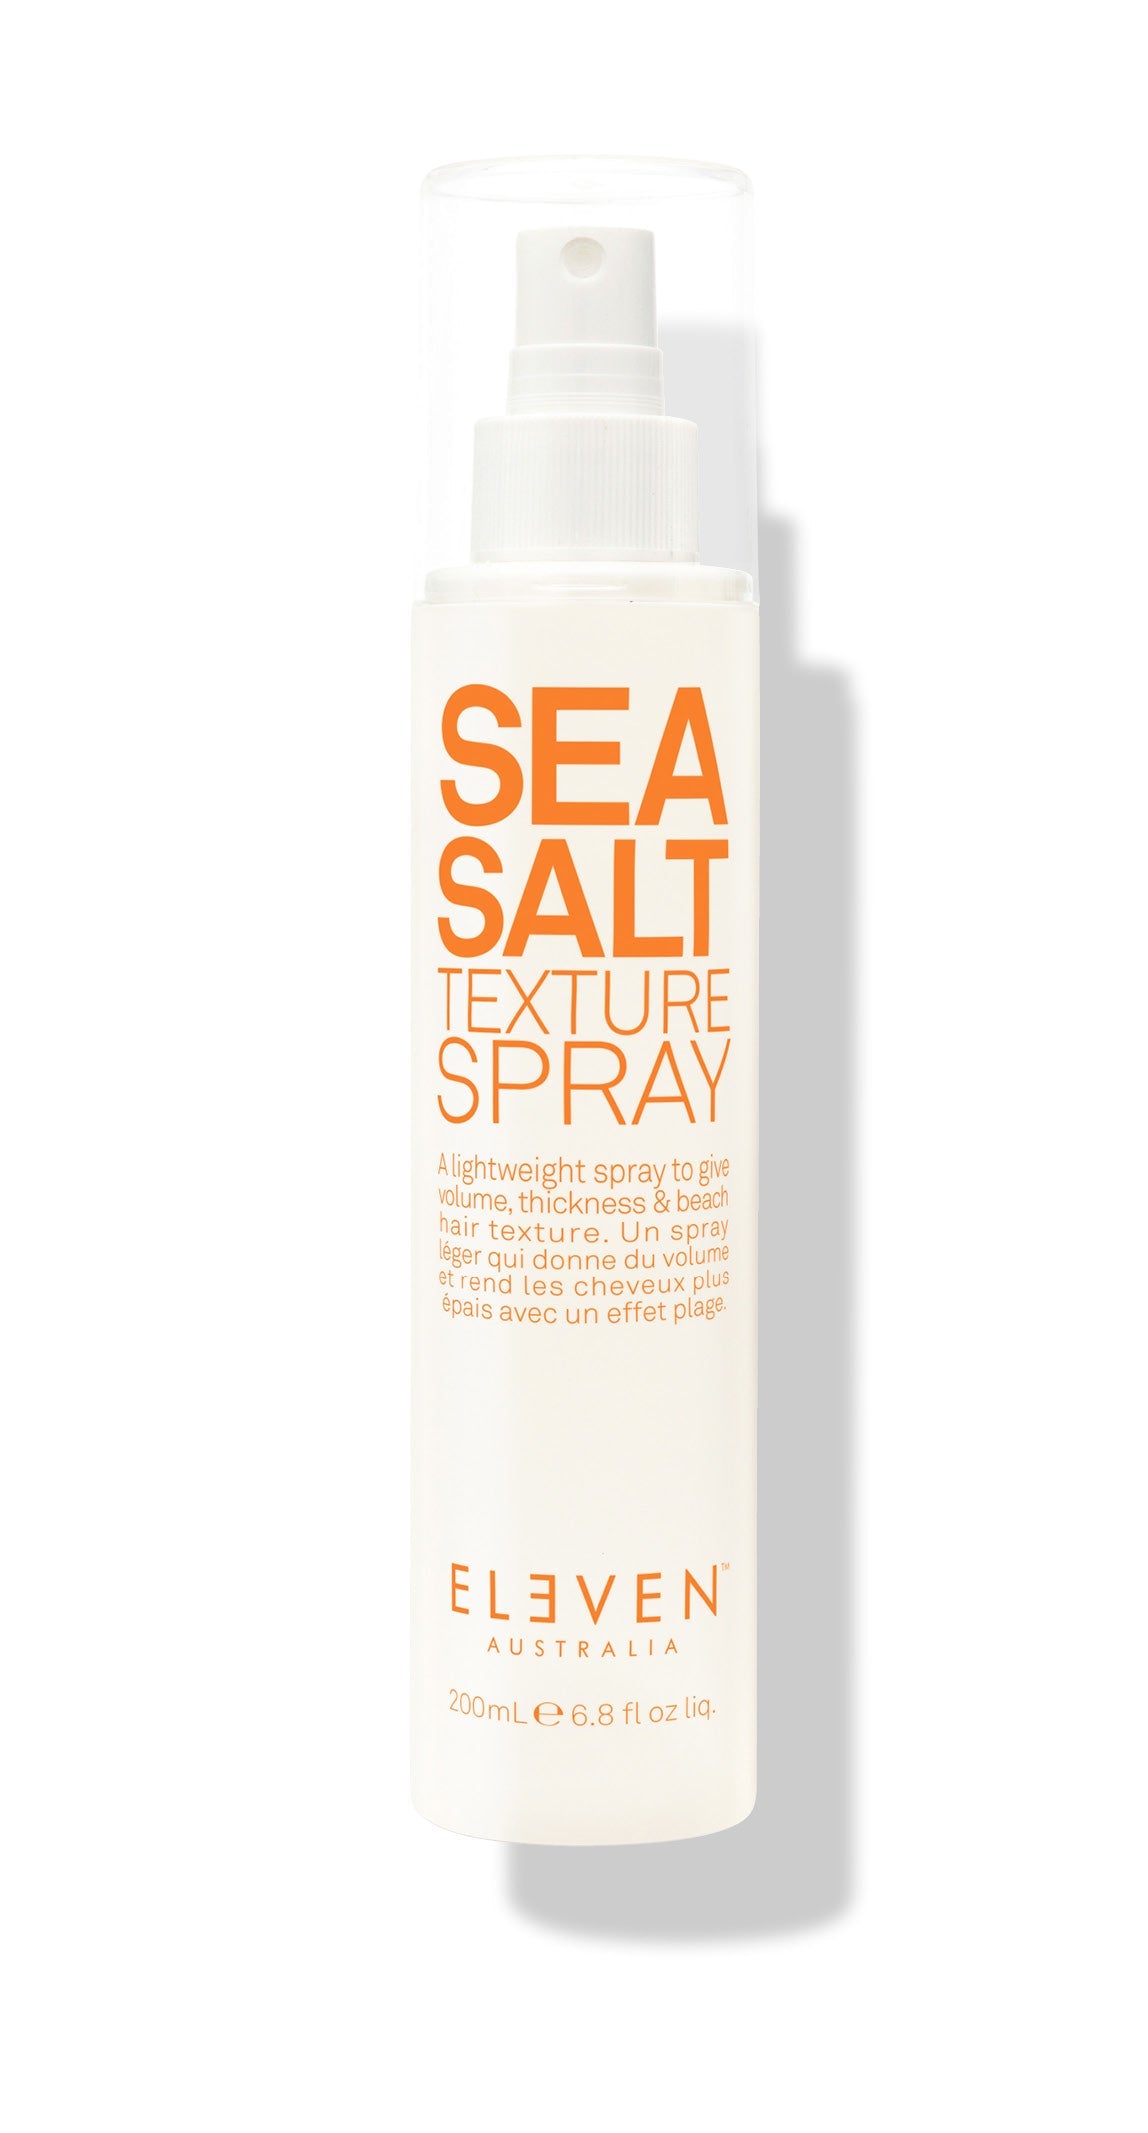 SEA SALT TEXTURE SPRAY 1.7 FL OZ